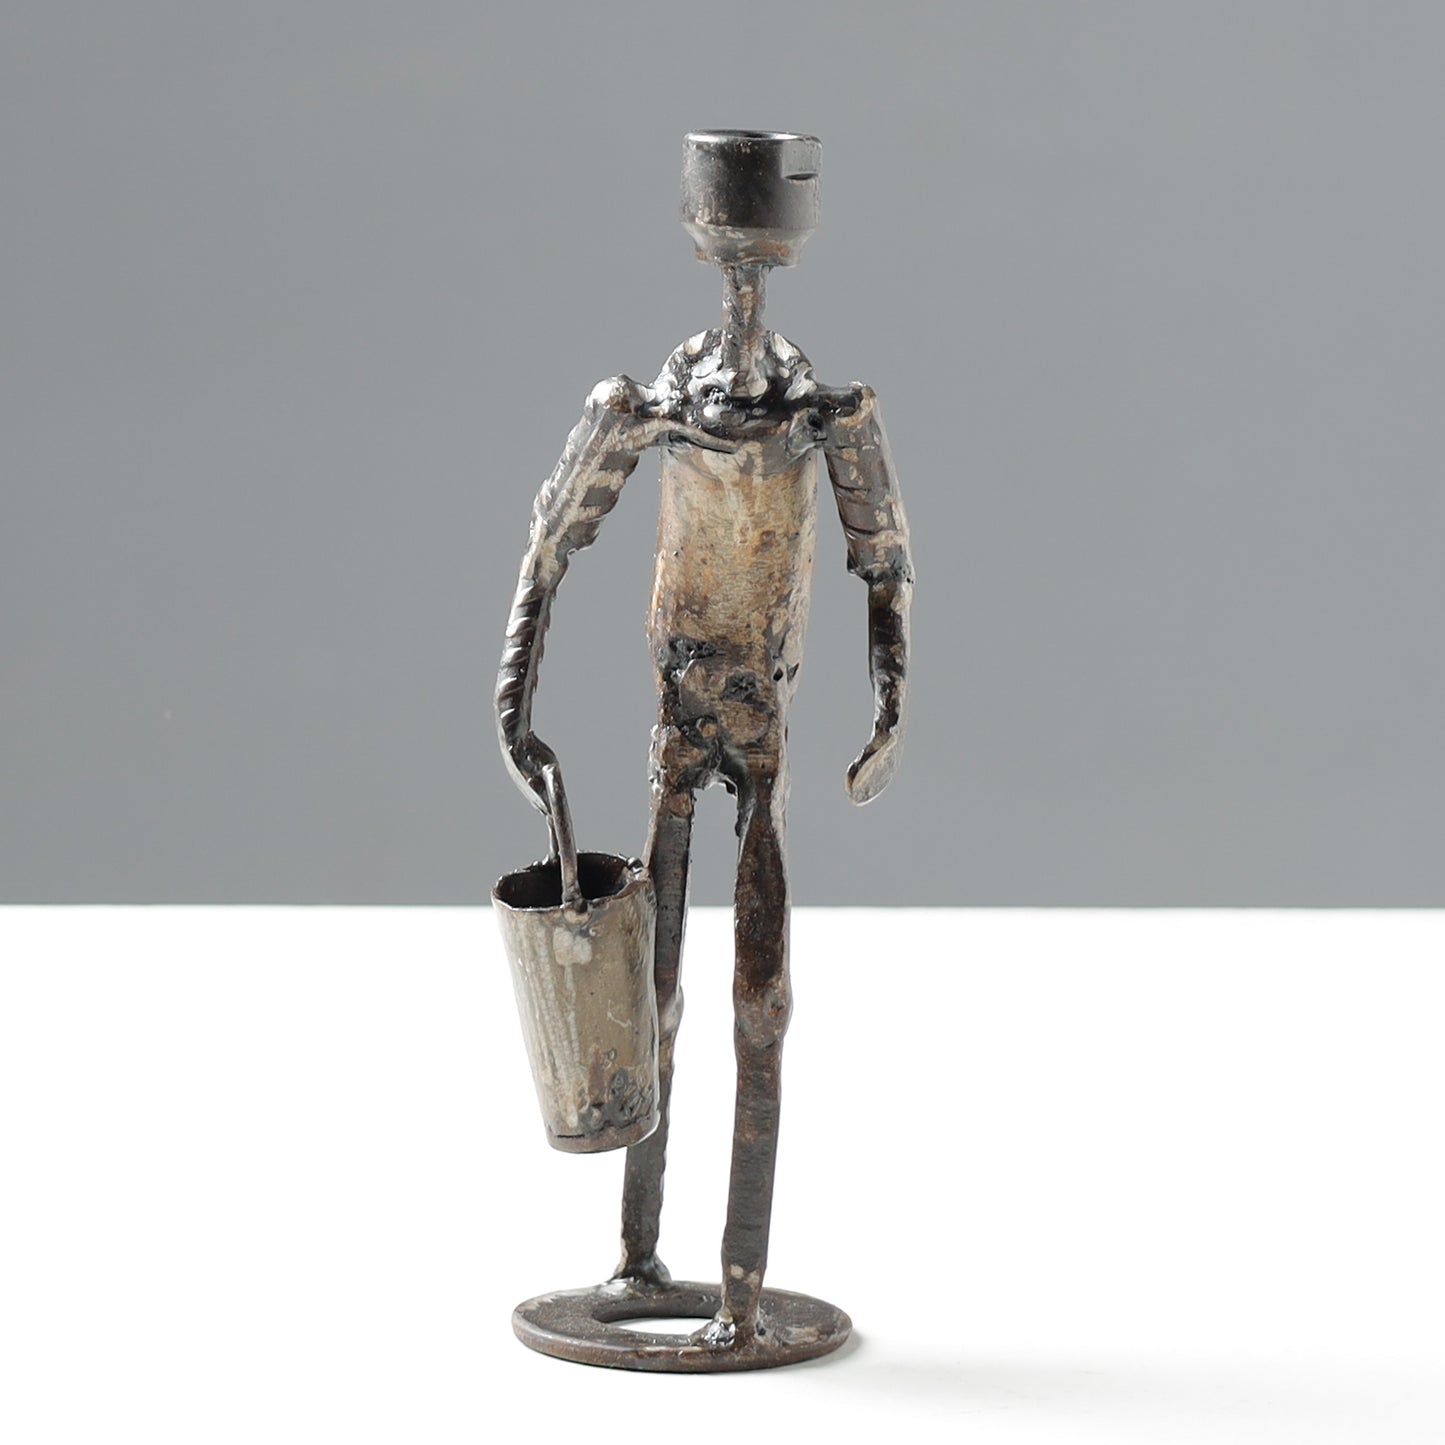 Farmer (Man) - Handmade Recycled Metal Sculpture by Debabrata Ruidas